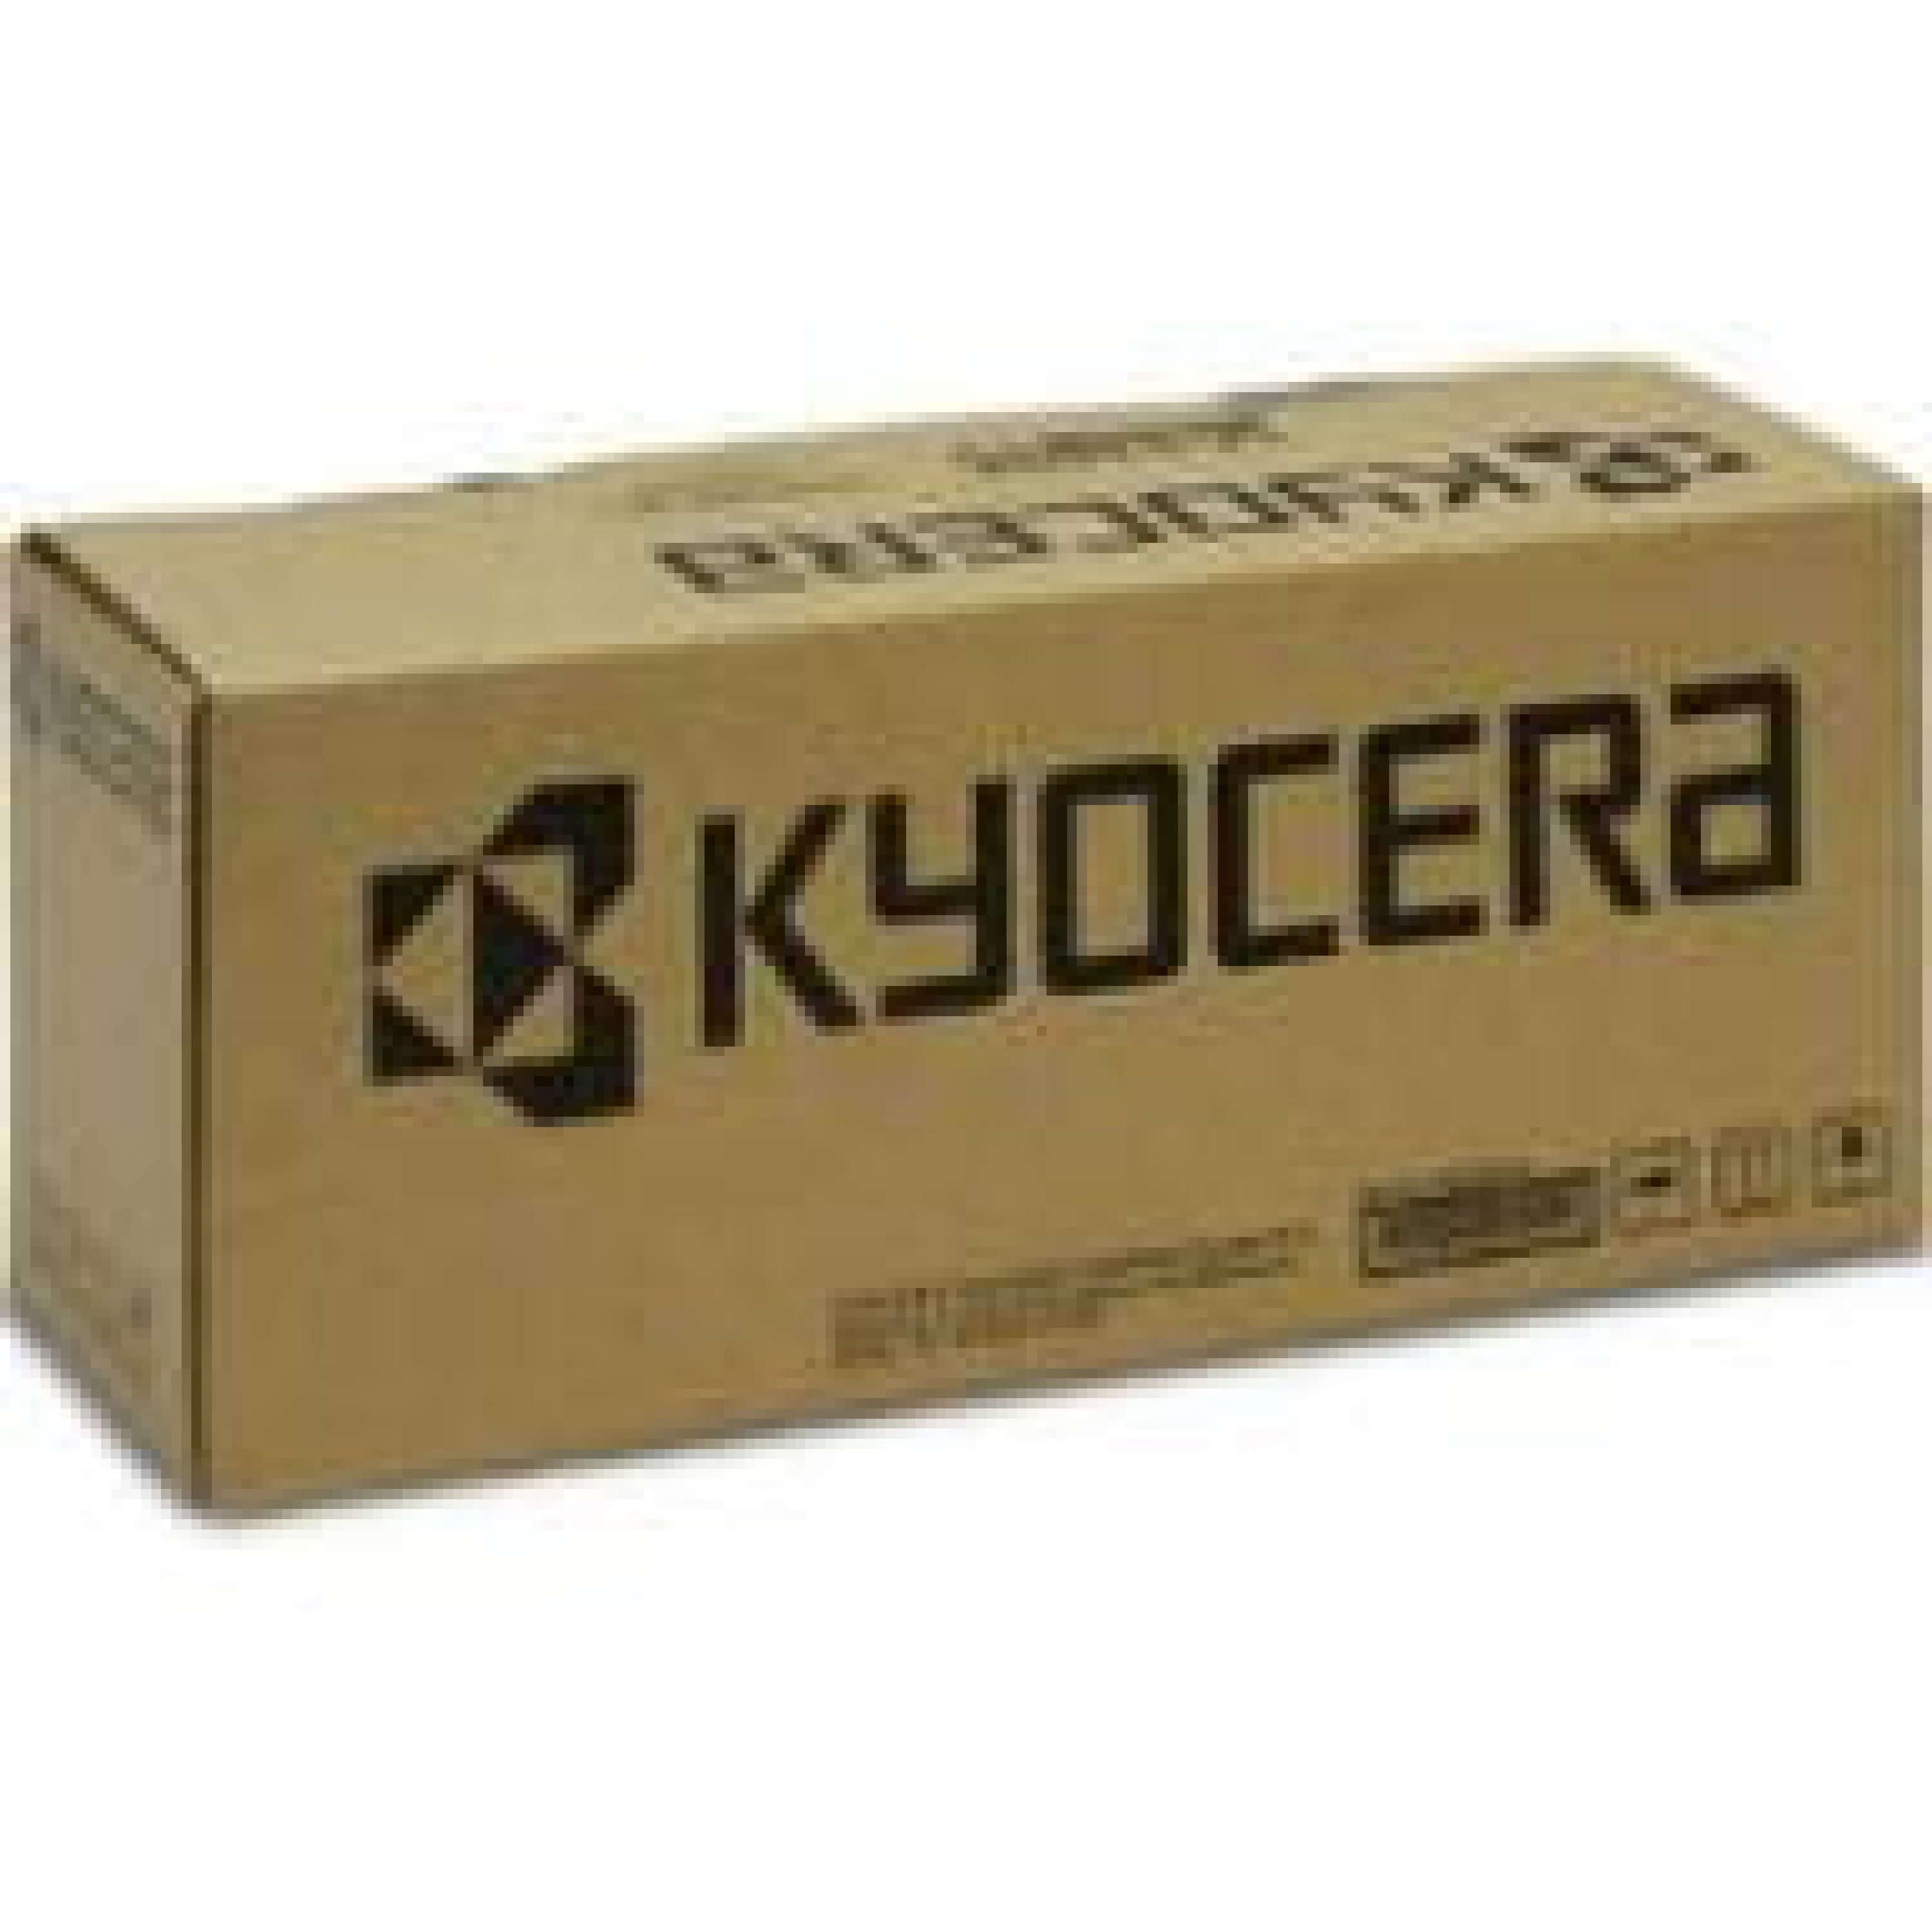 Original Toner Kyocera MA 2100 cwfx (1T0C0ABNL1 / TK-5430M)